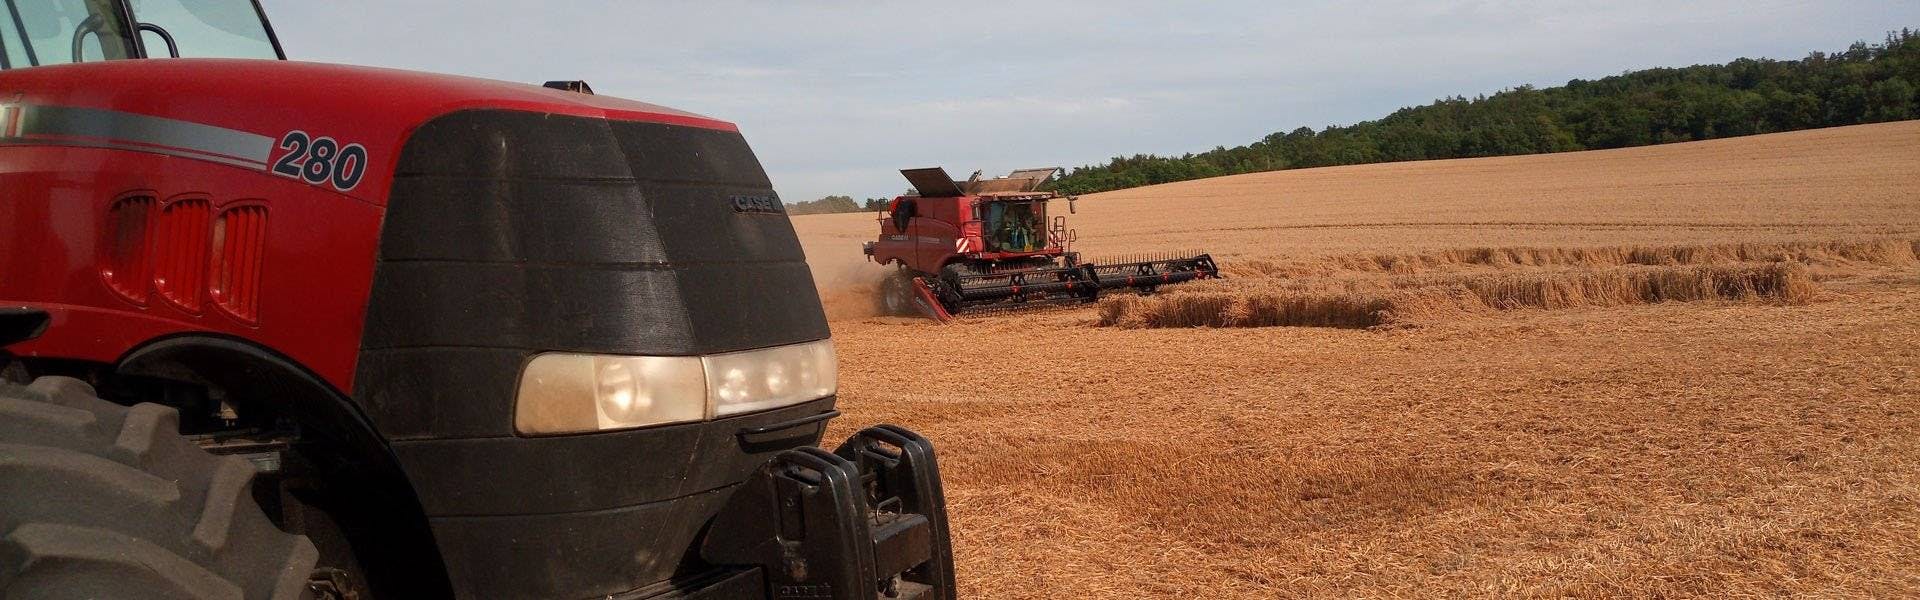 FieldBee in the Fields: The story of a Czech farmer – “Just go for it!”